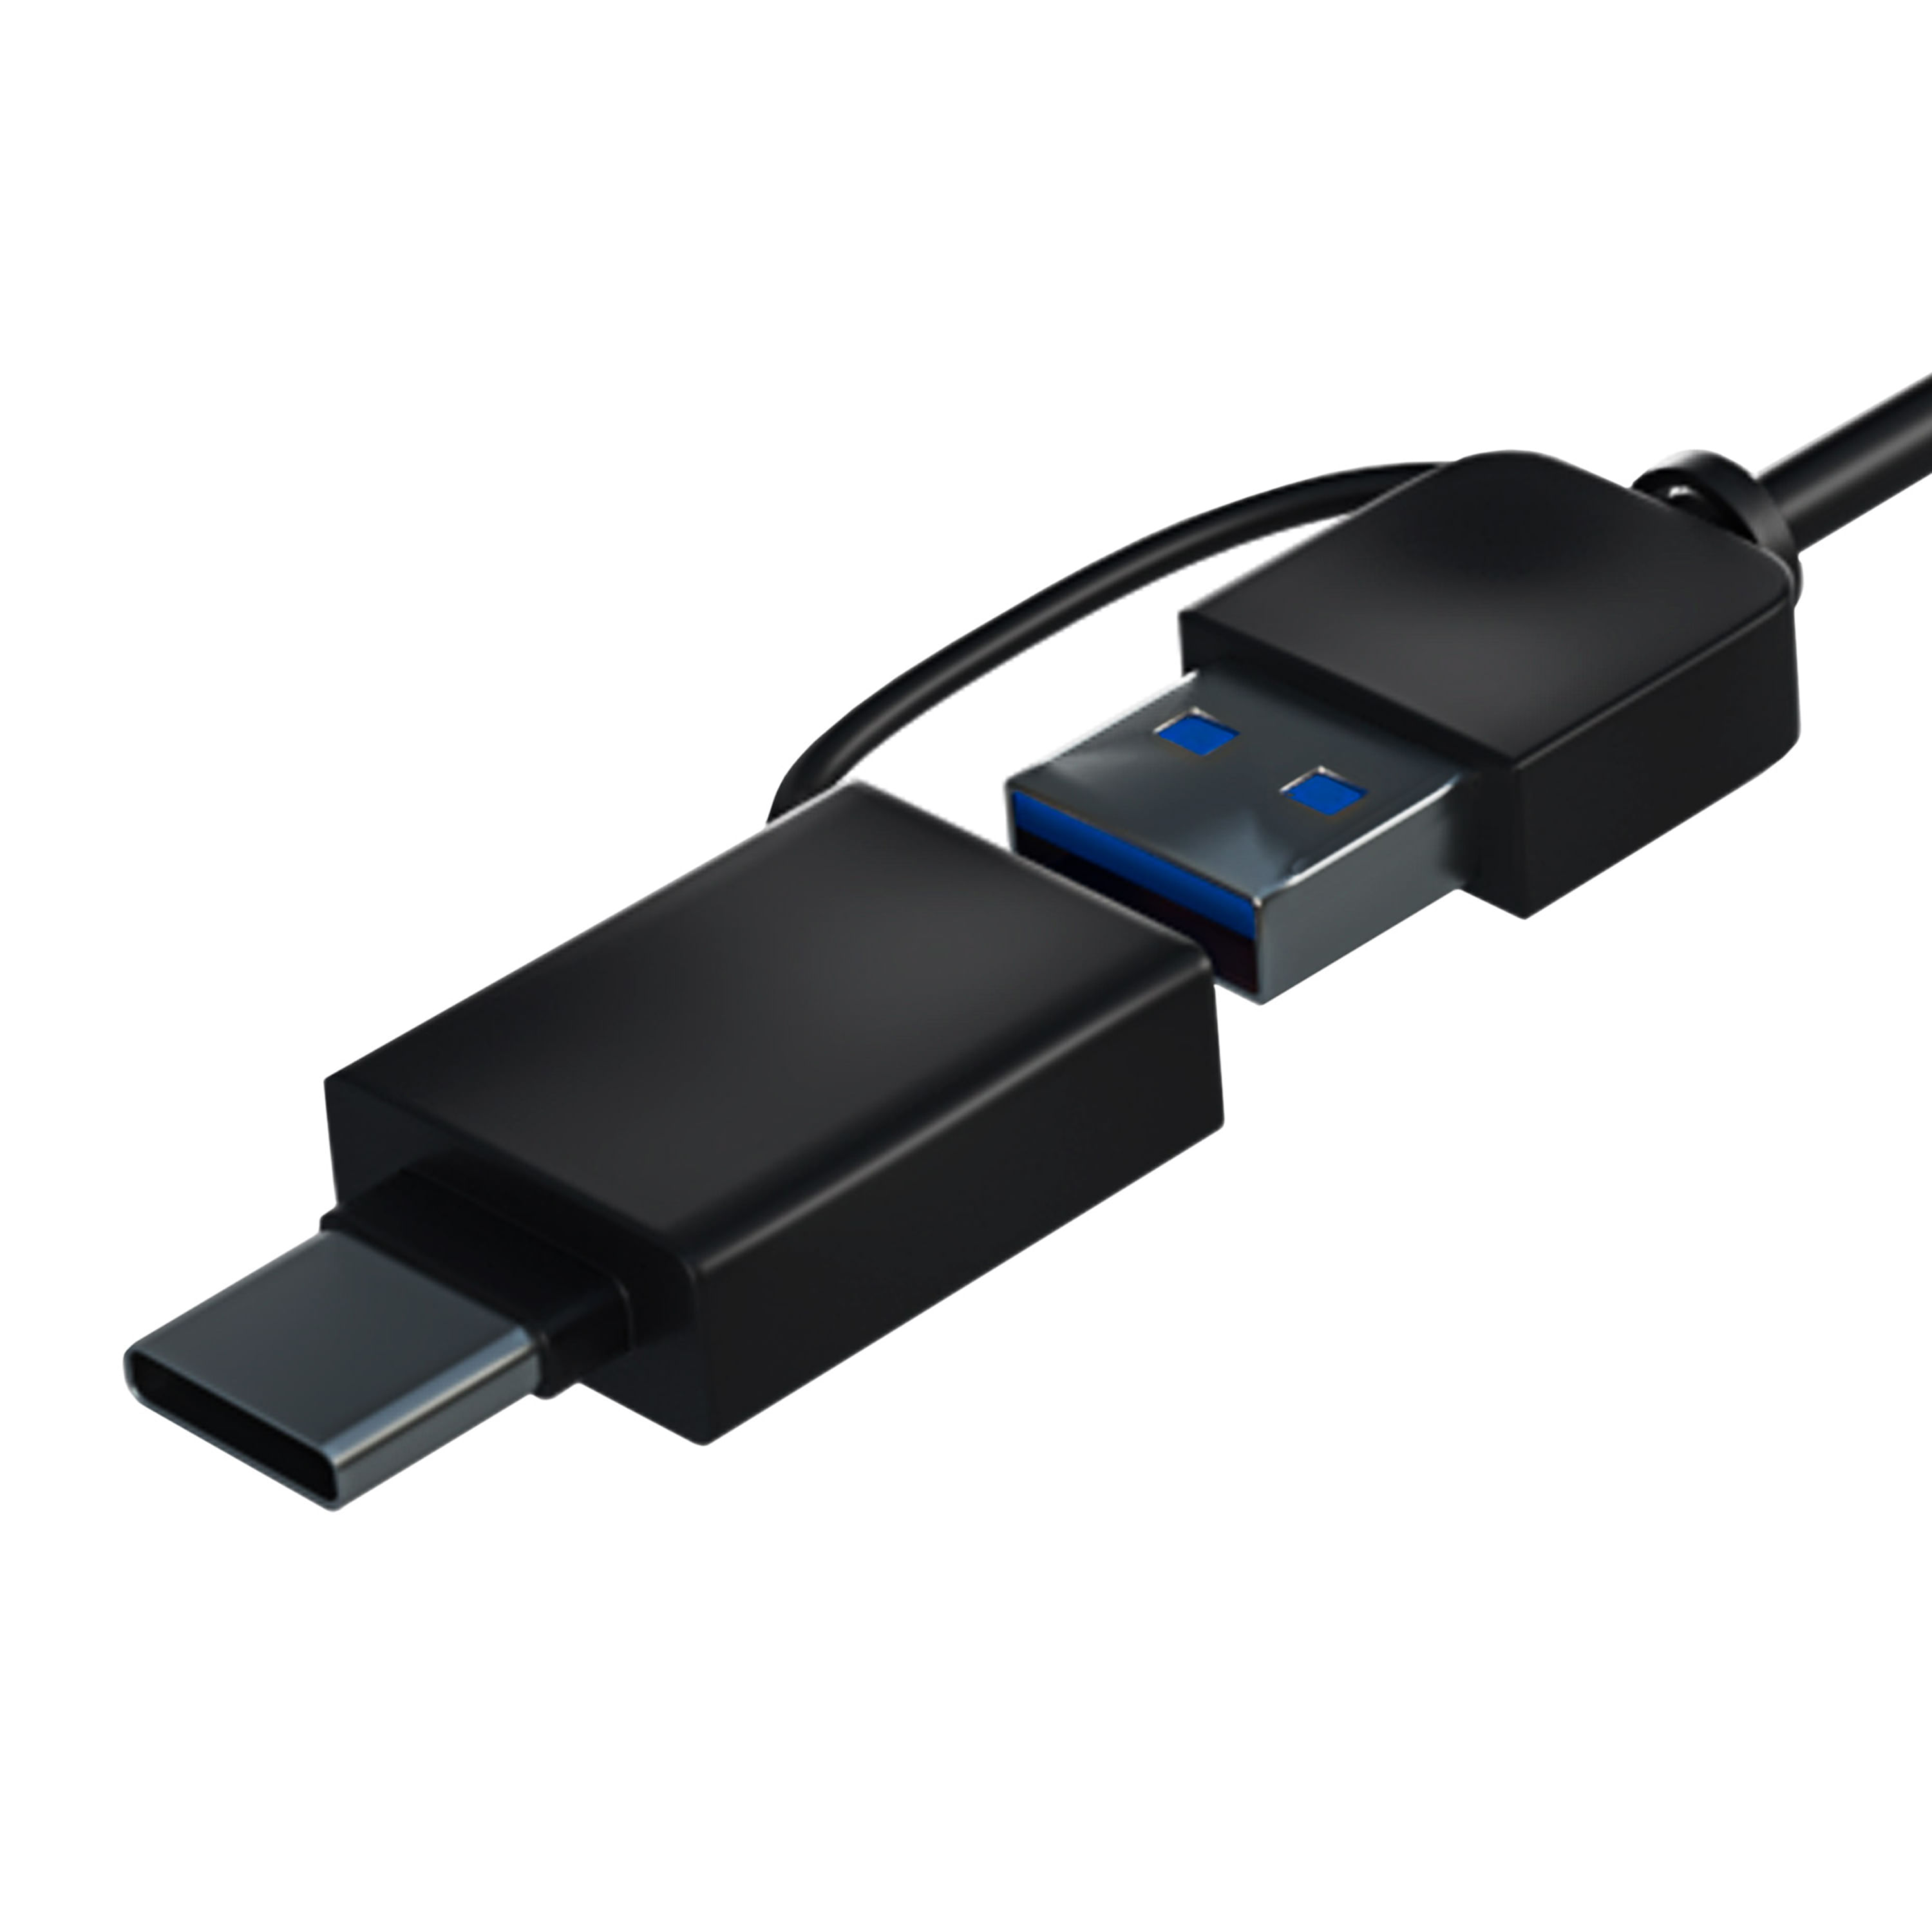 Cargador USB múltiple 4puertos 5v 7873 Mlab